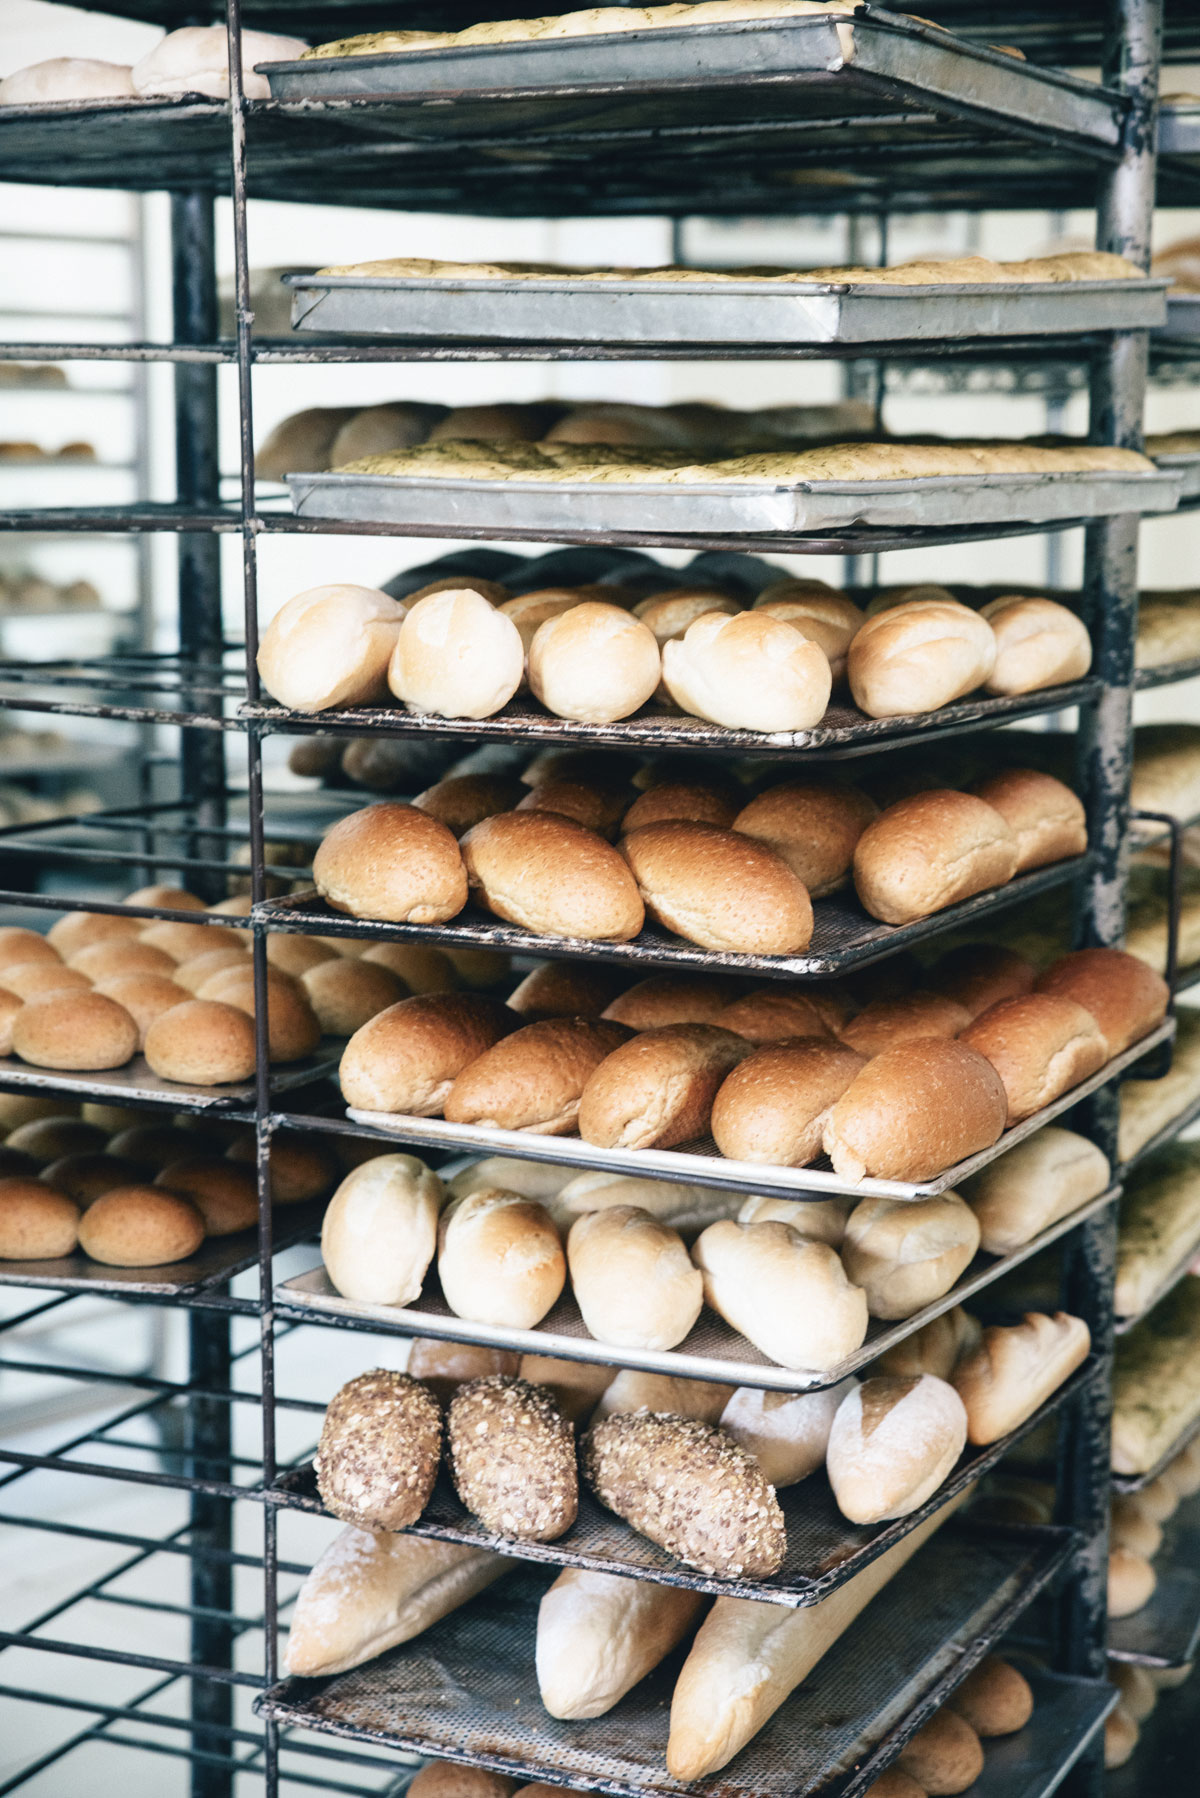 Racks of just baked bread cooling at Food Garage